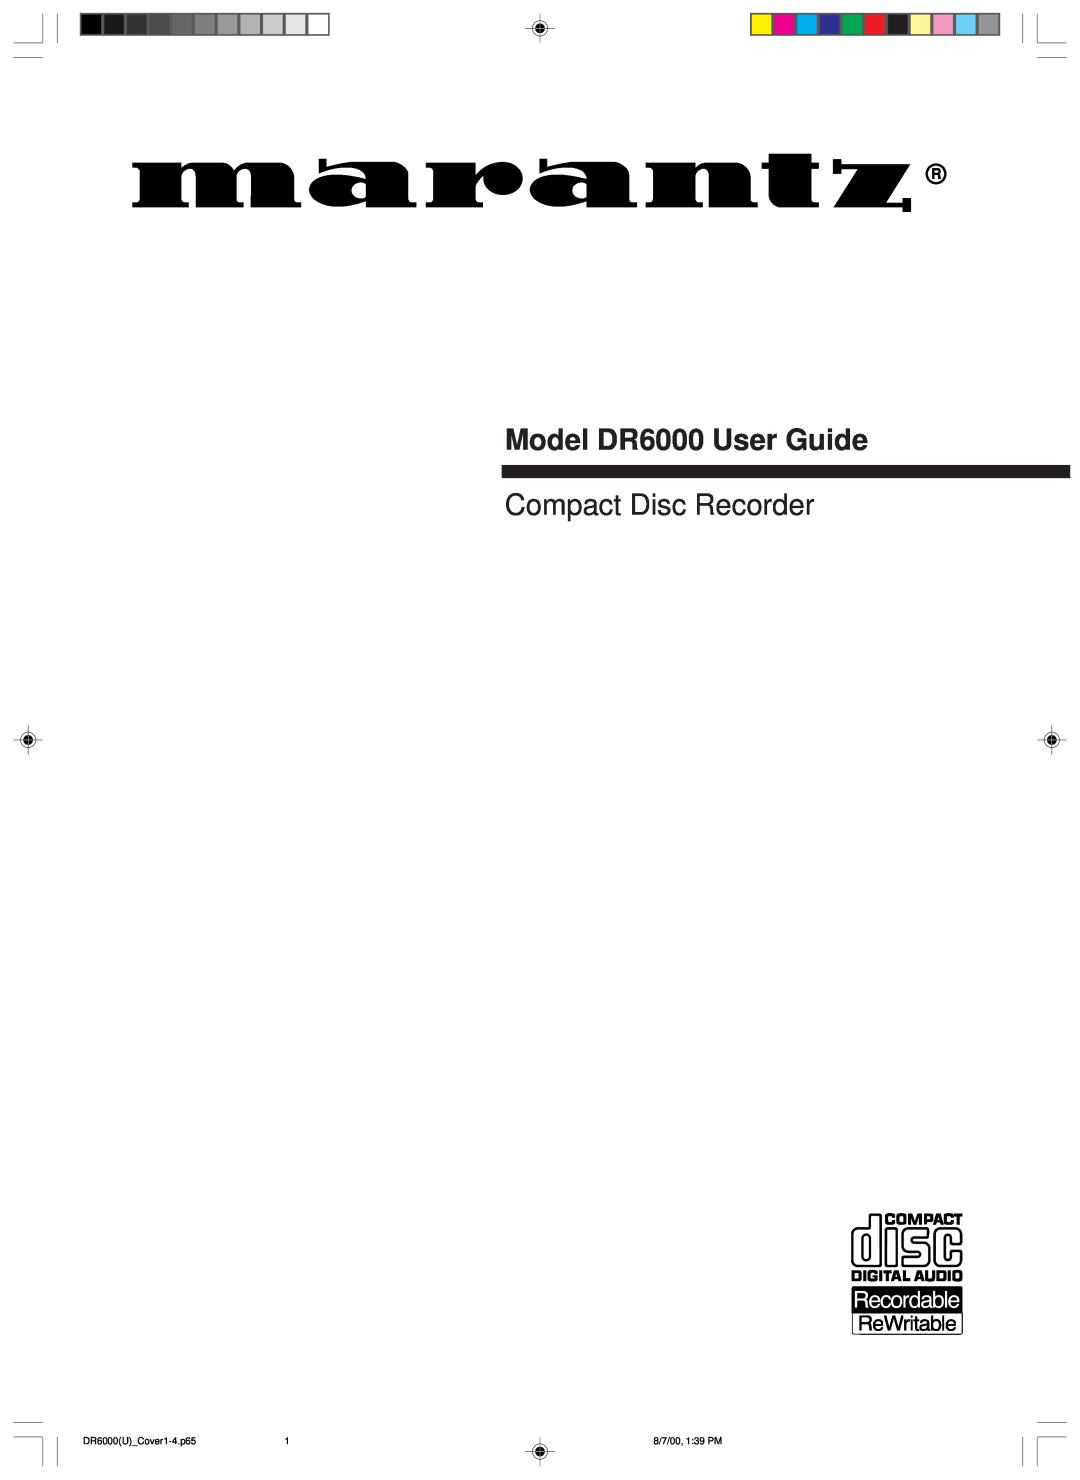 Marantz manual Model DR6000 User Guide, Compact Disc Recorder, Recordable, ReWritable, DR6000U Cover1-4.p65 